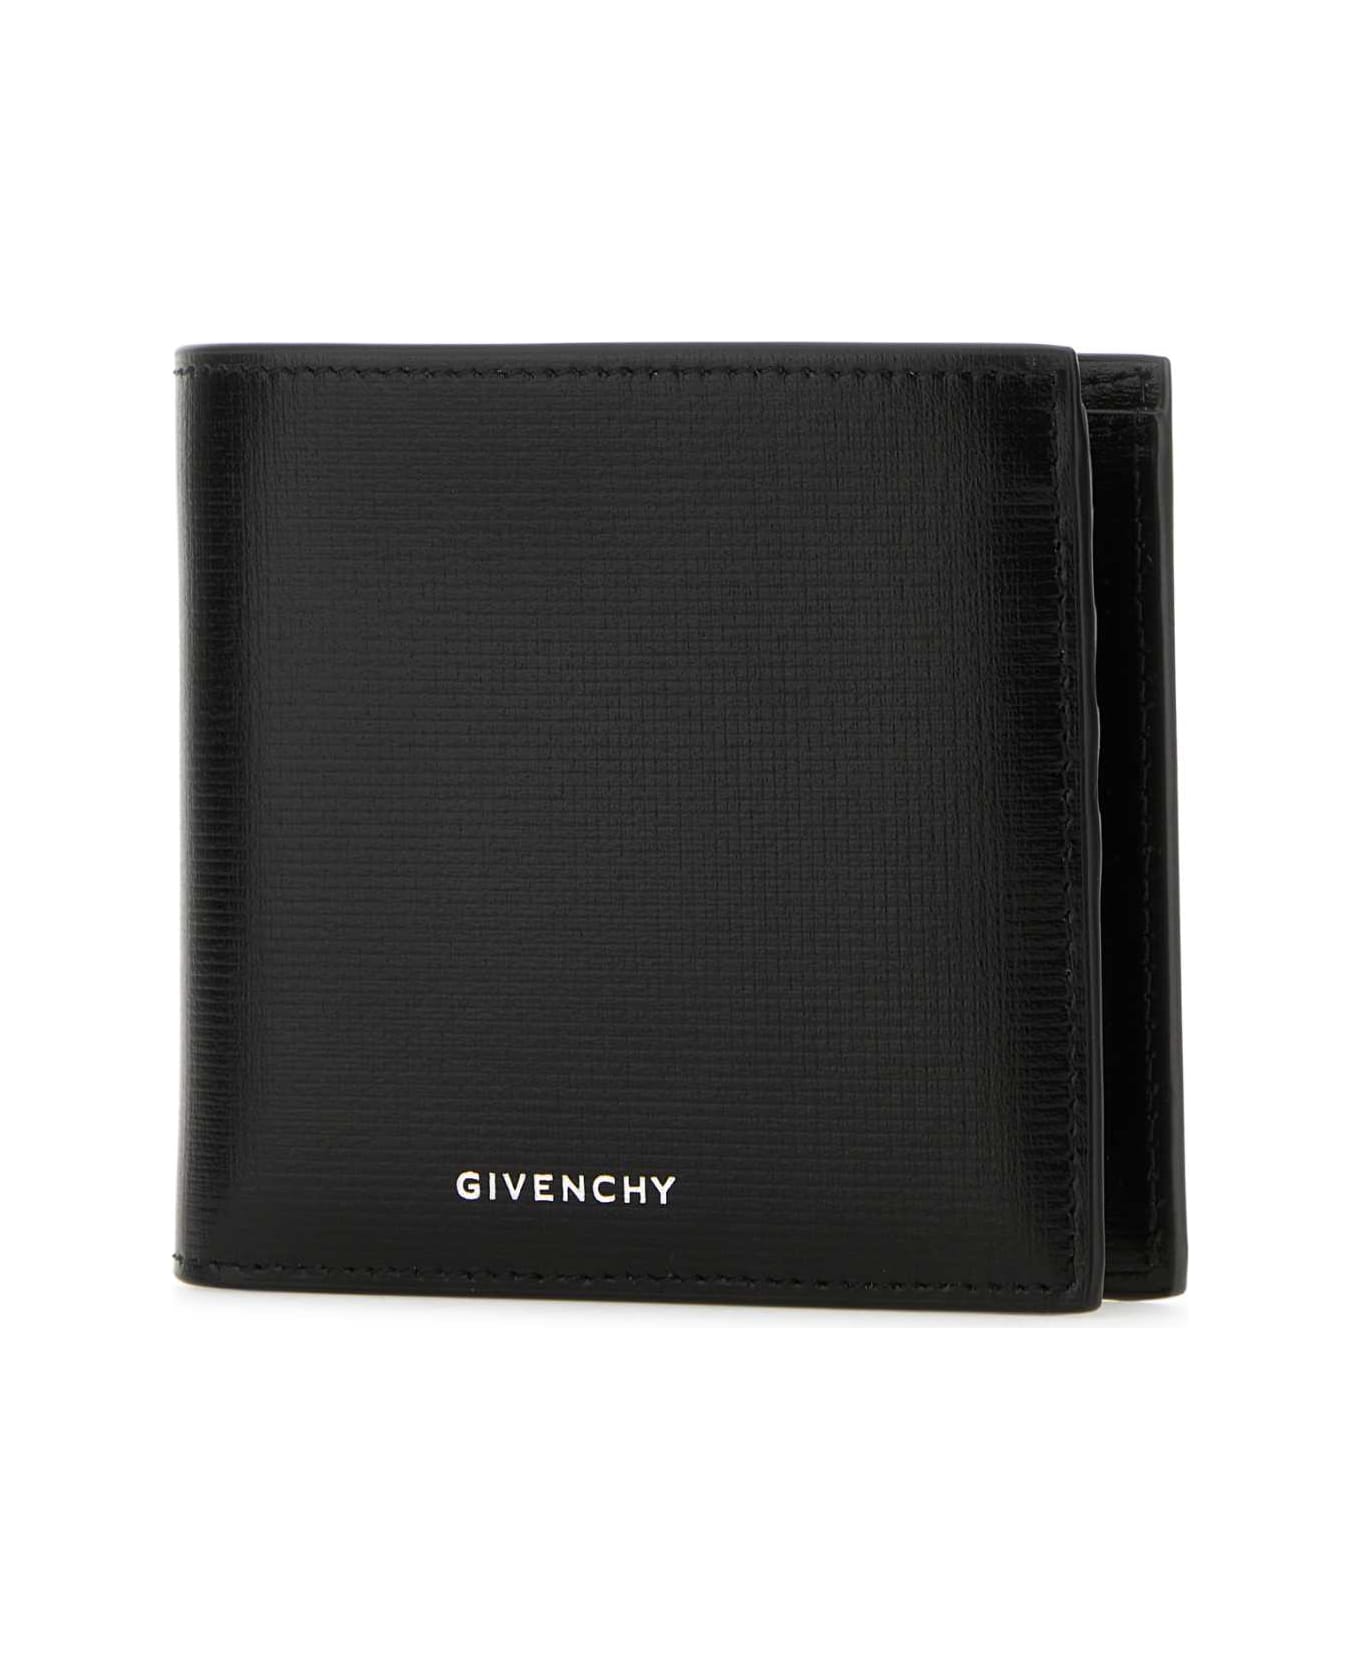 Givenchy Black Leather Wallet - Black